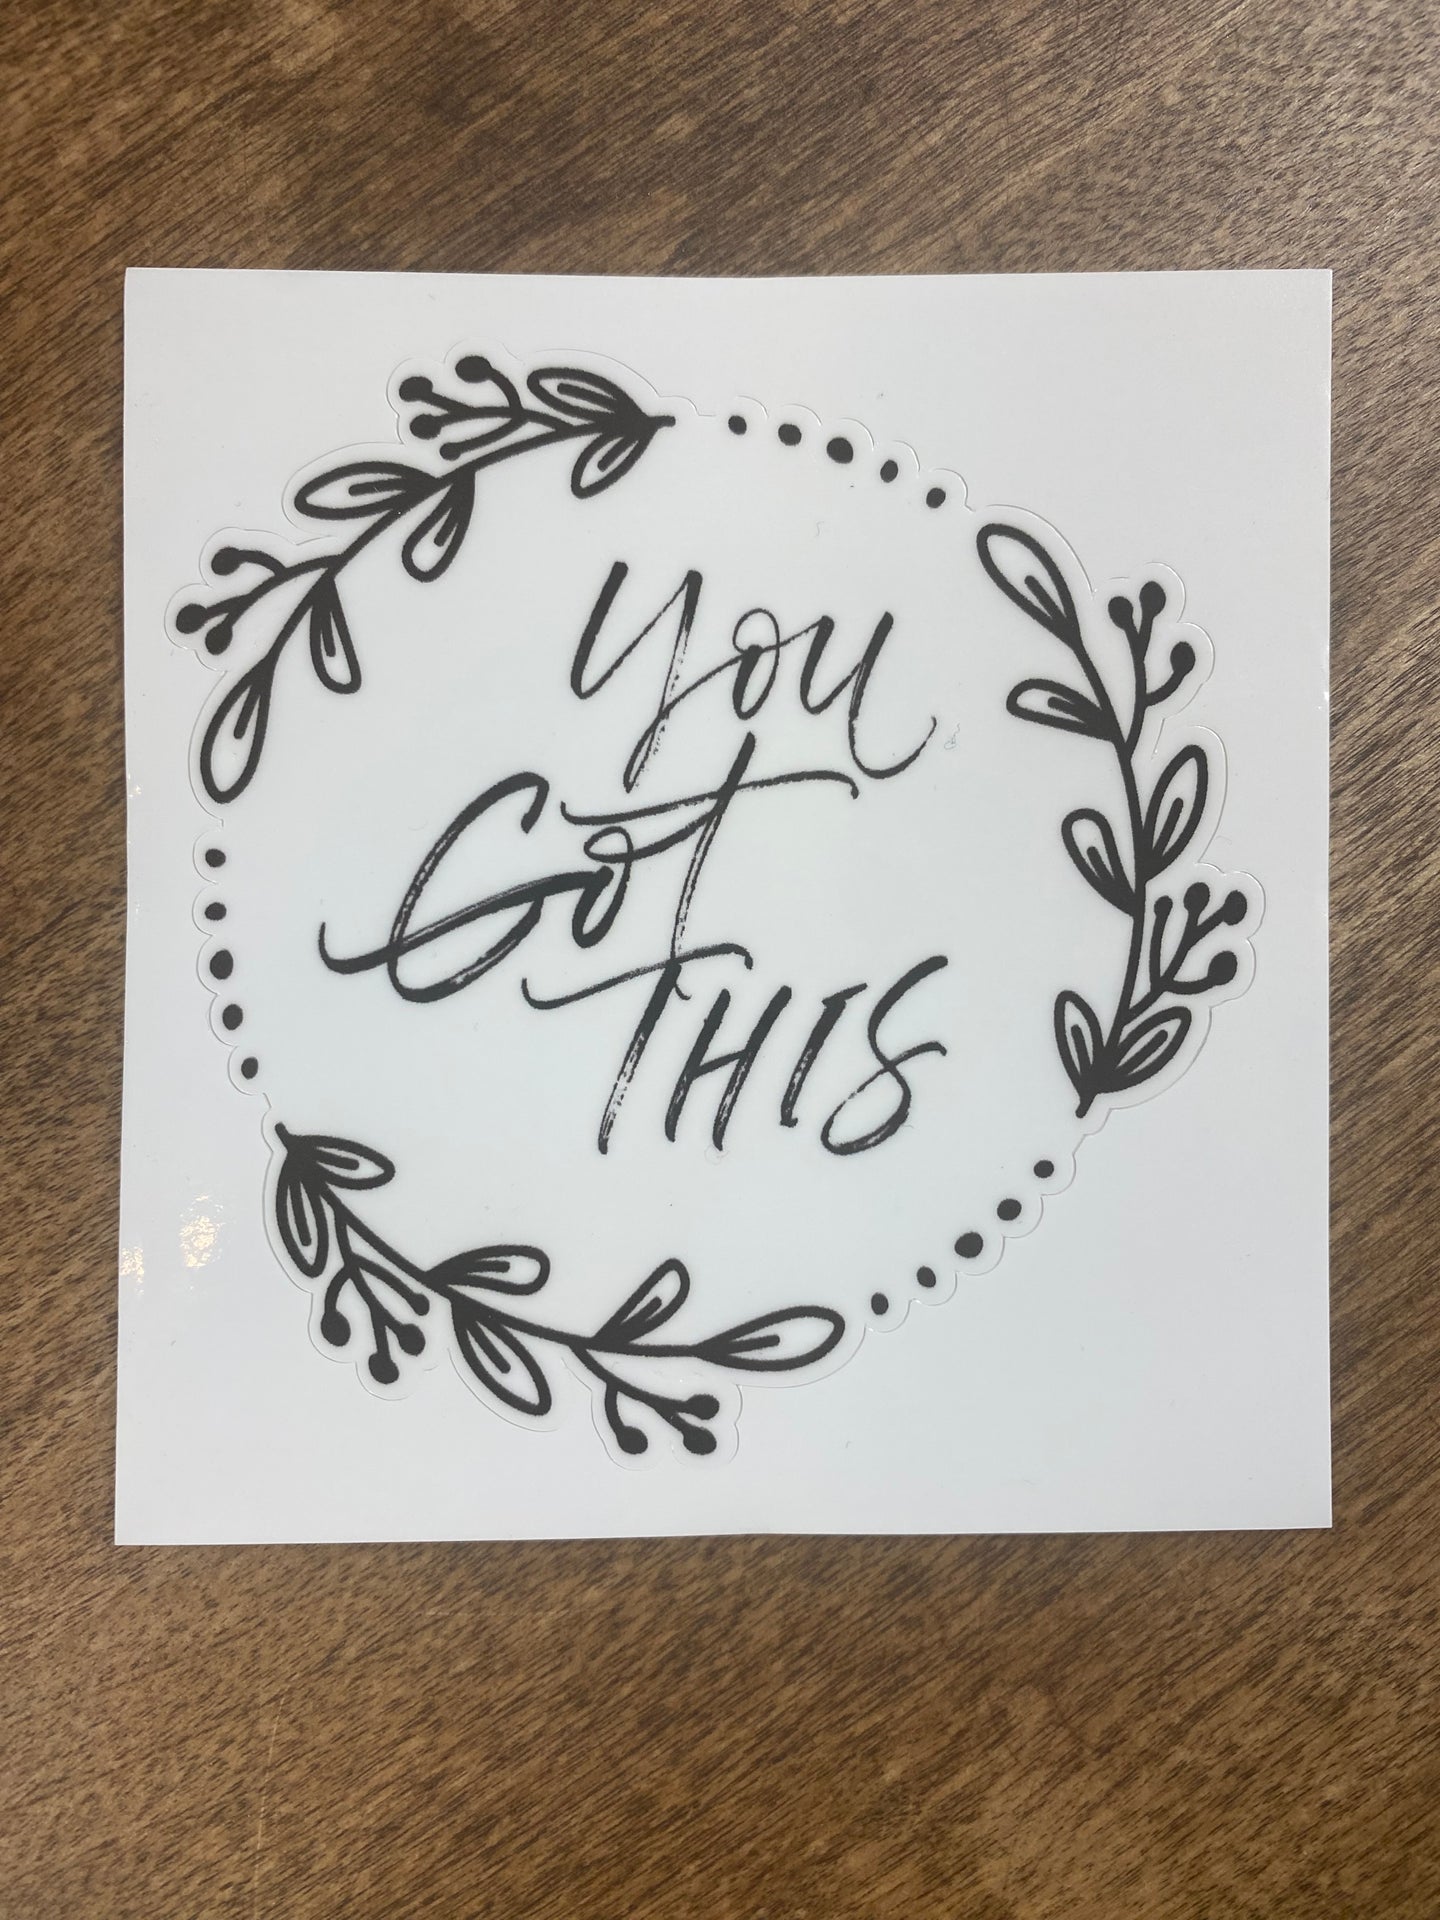 You Got This - Sticker